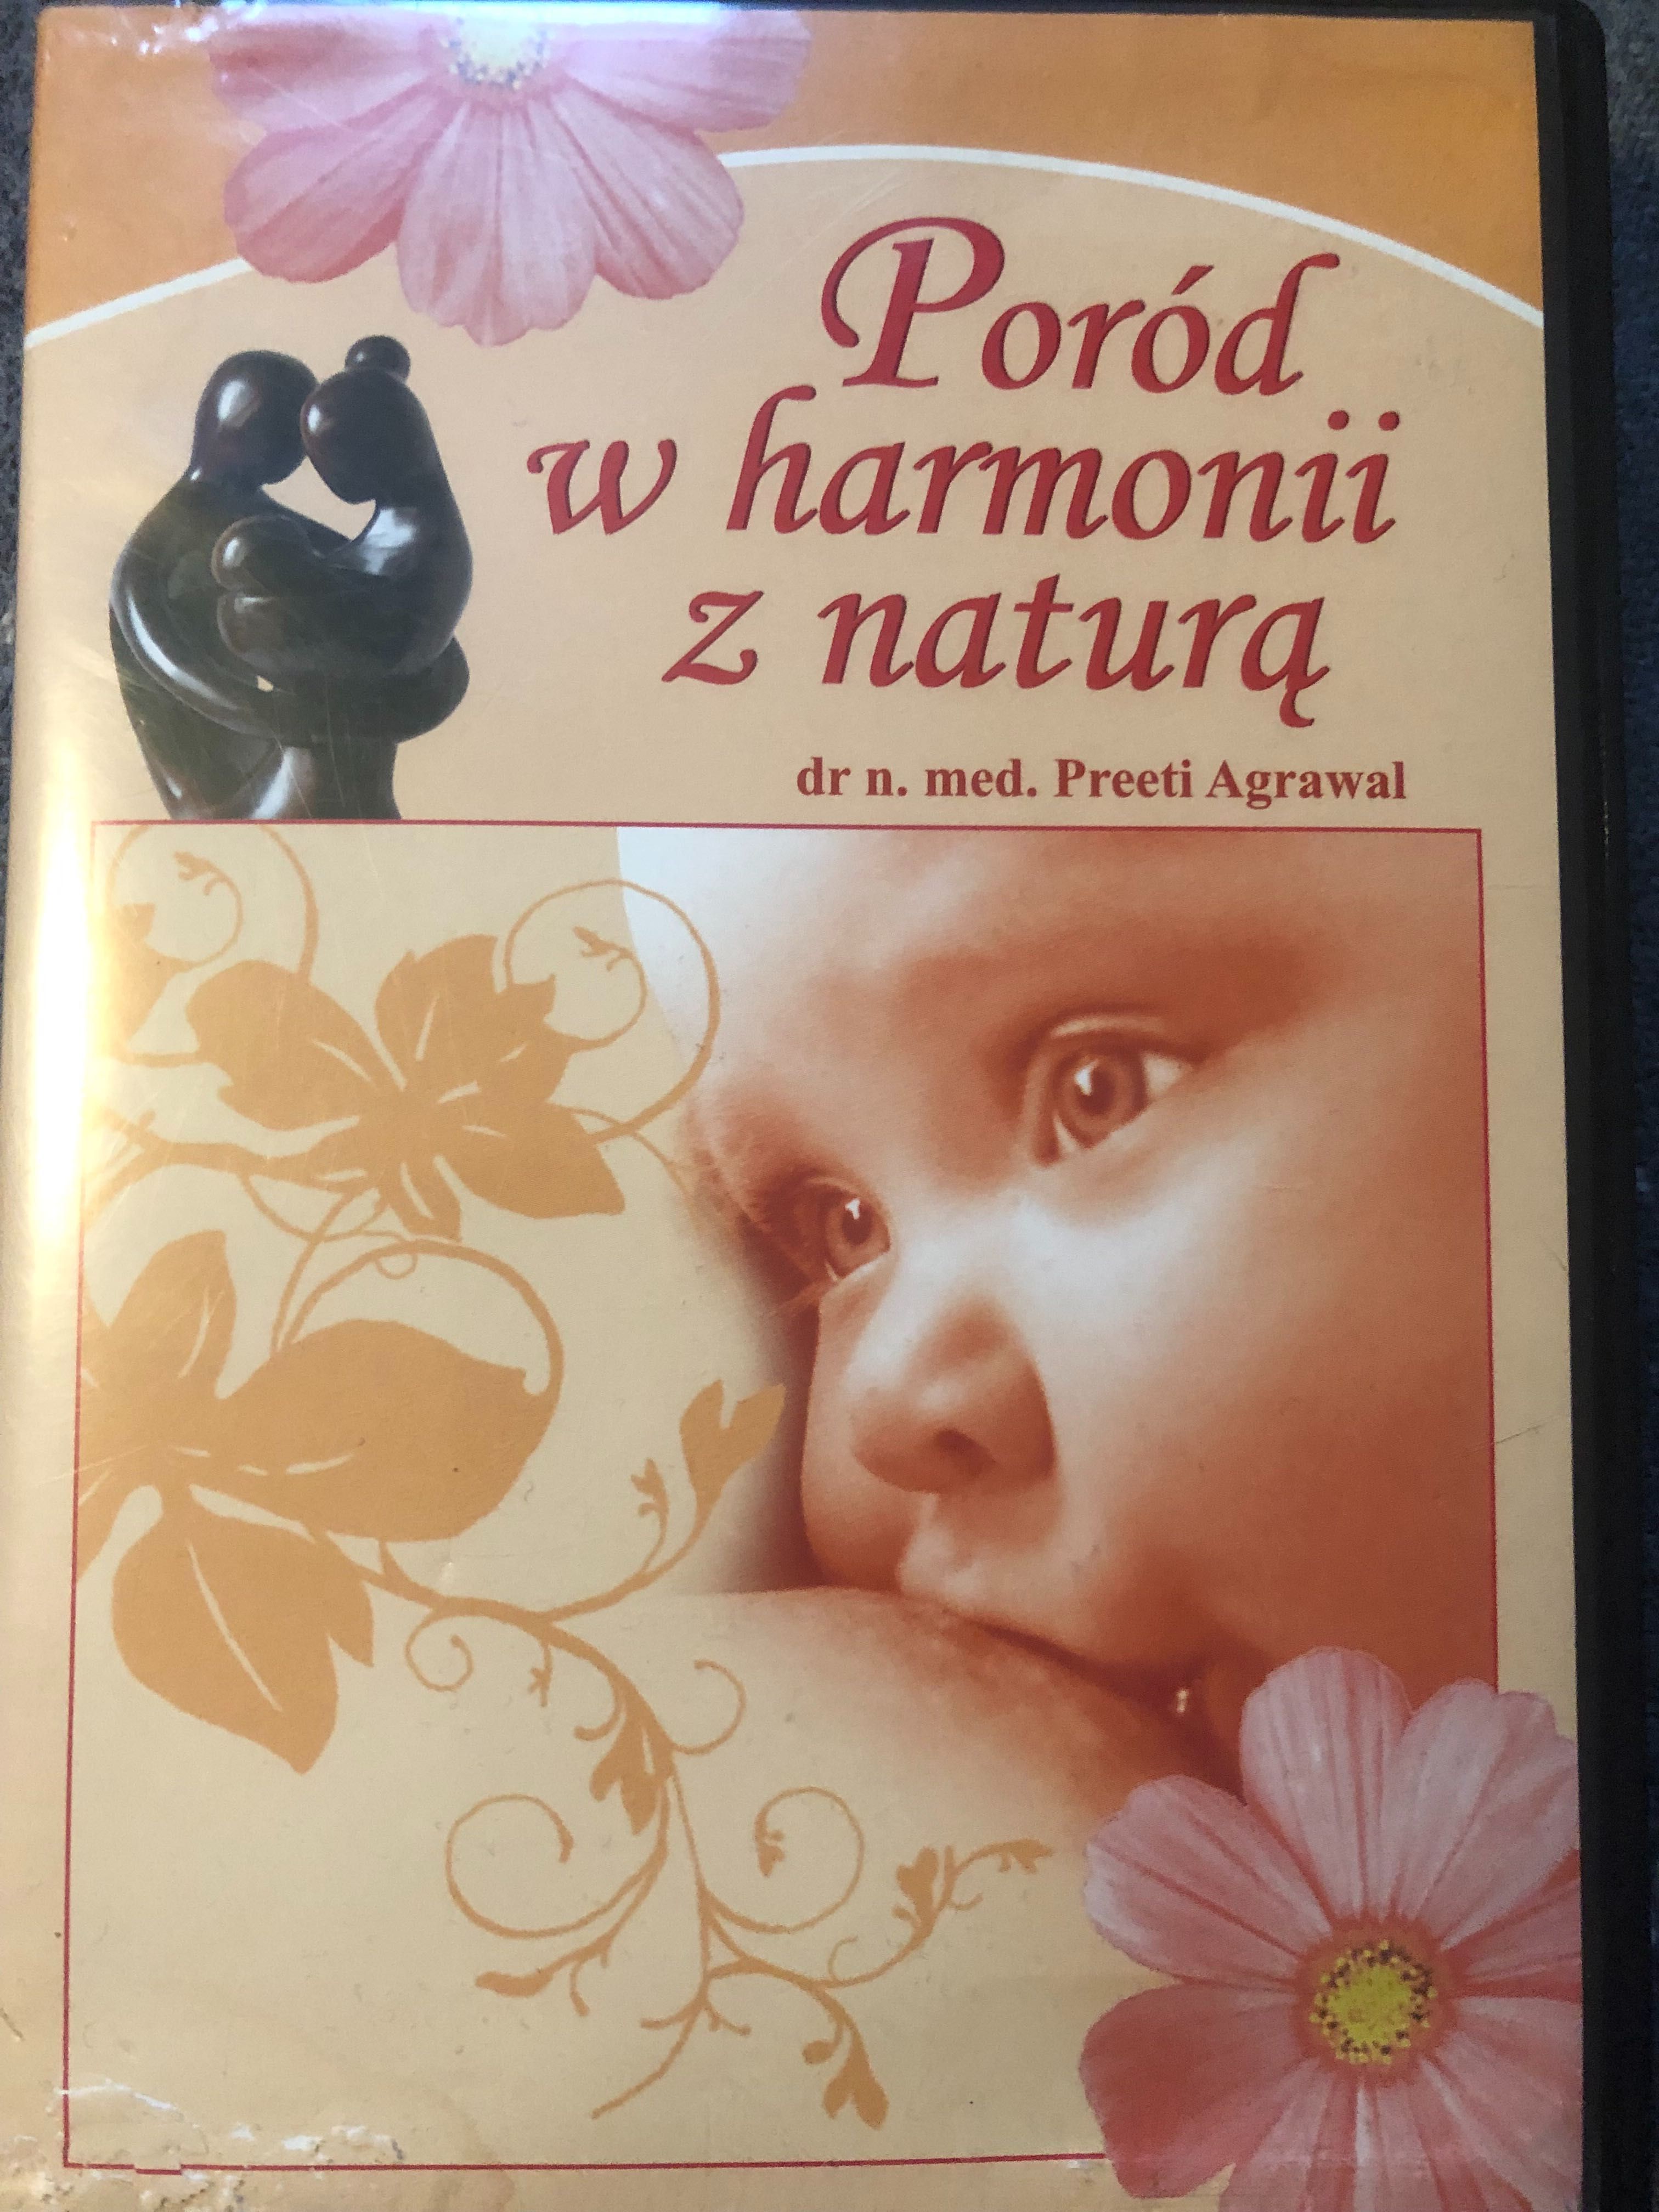 Poród w harmonii z naturą, dr Preeti Agrawal. Płyta DVD.